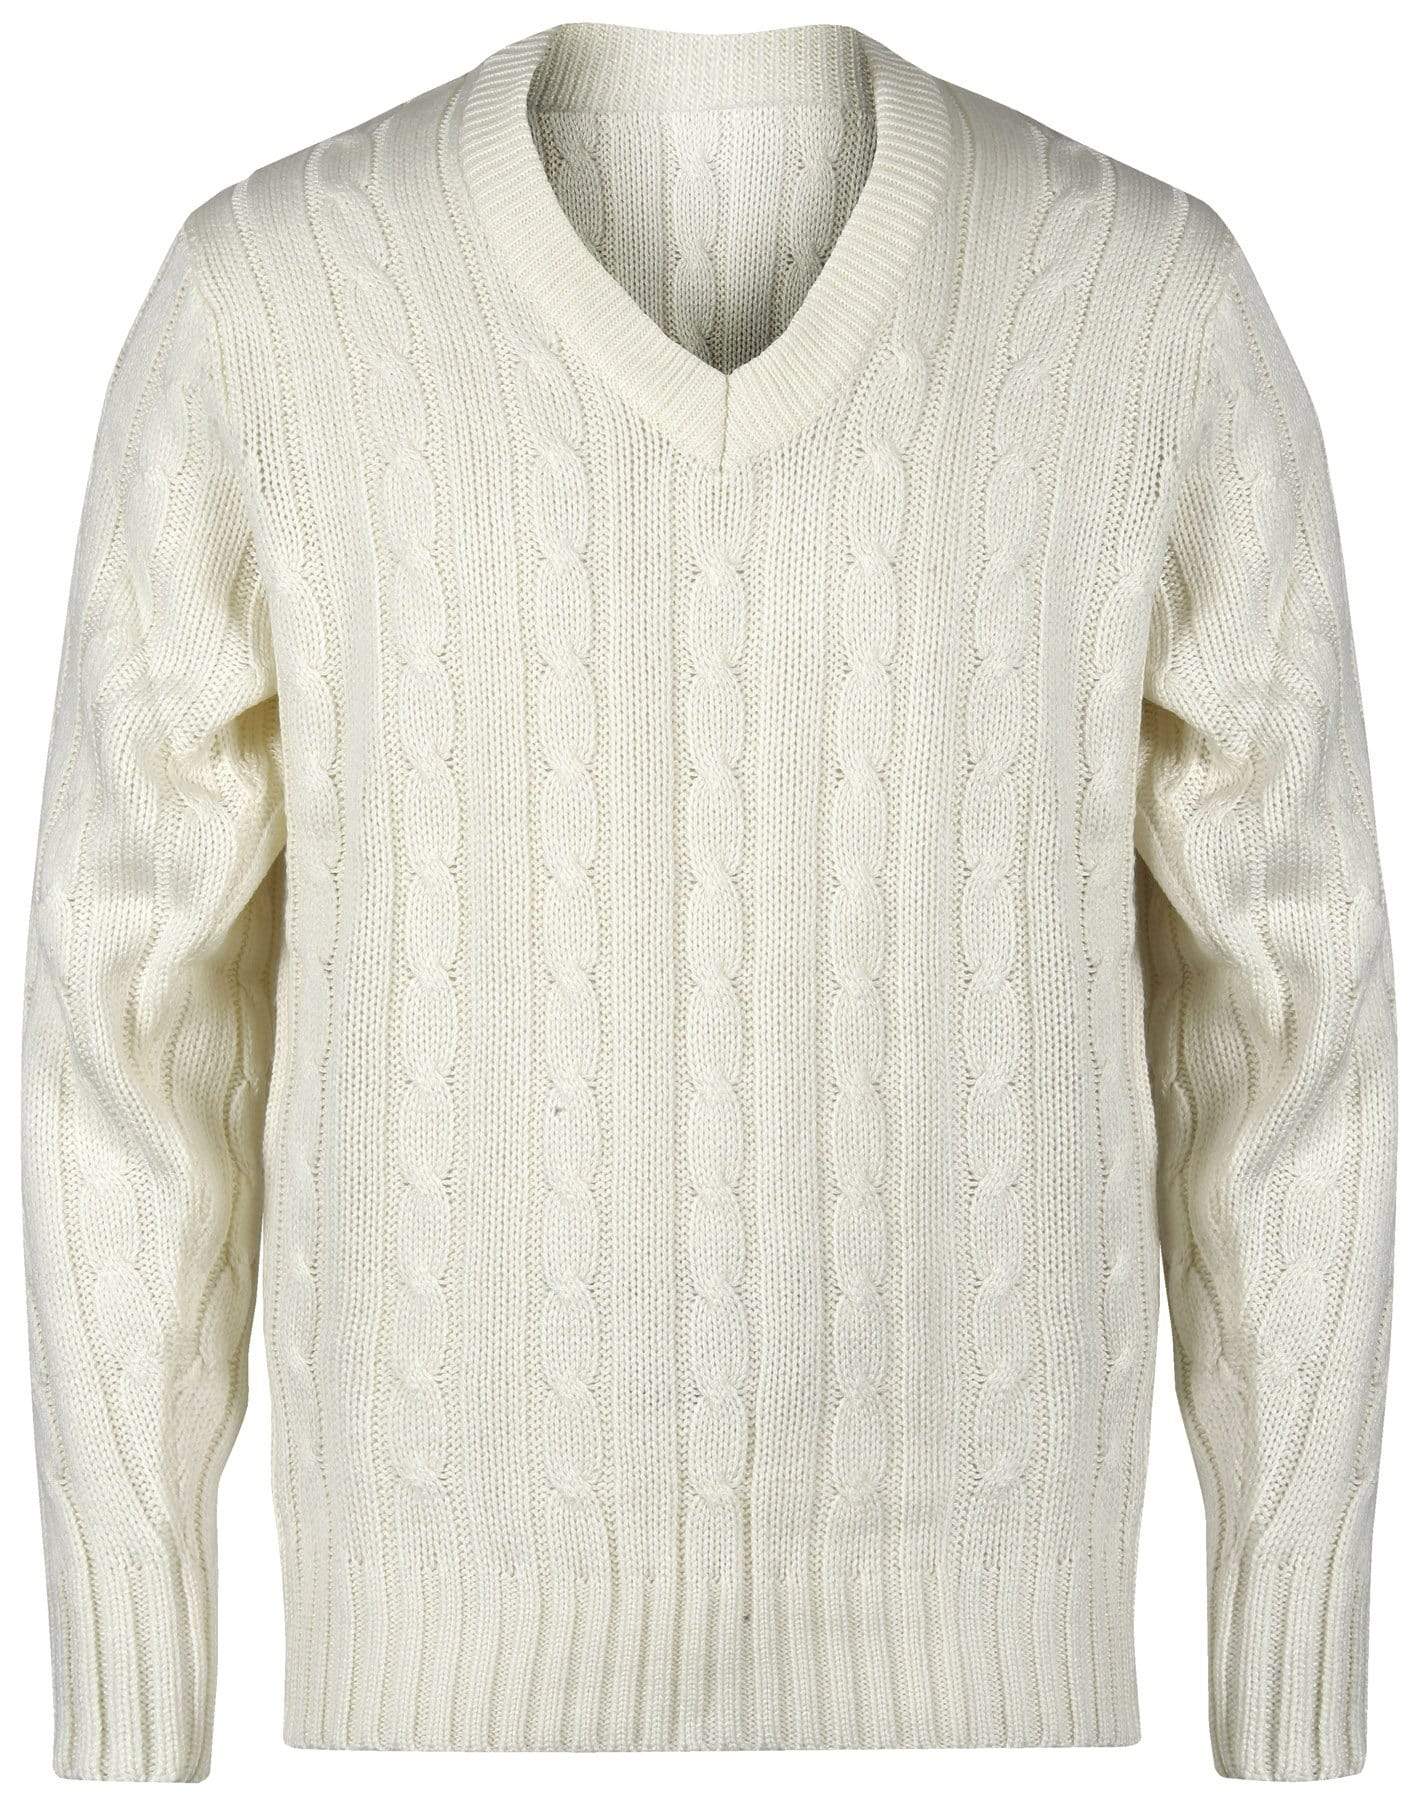 Gray Nicolls Clothing 12 Gray-Nicolls Long Sleeve Plain Cricket Sweater